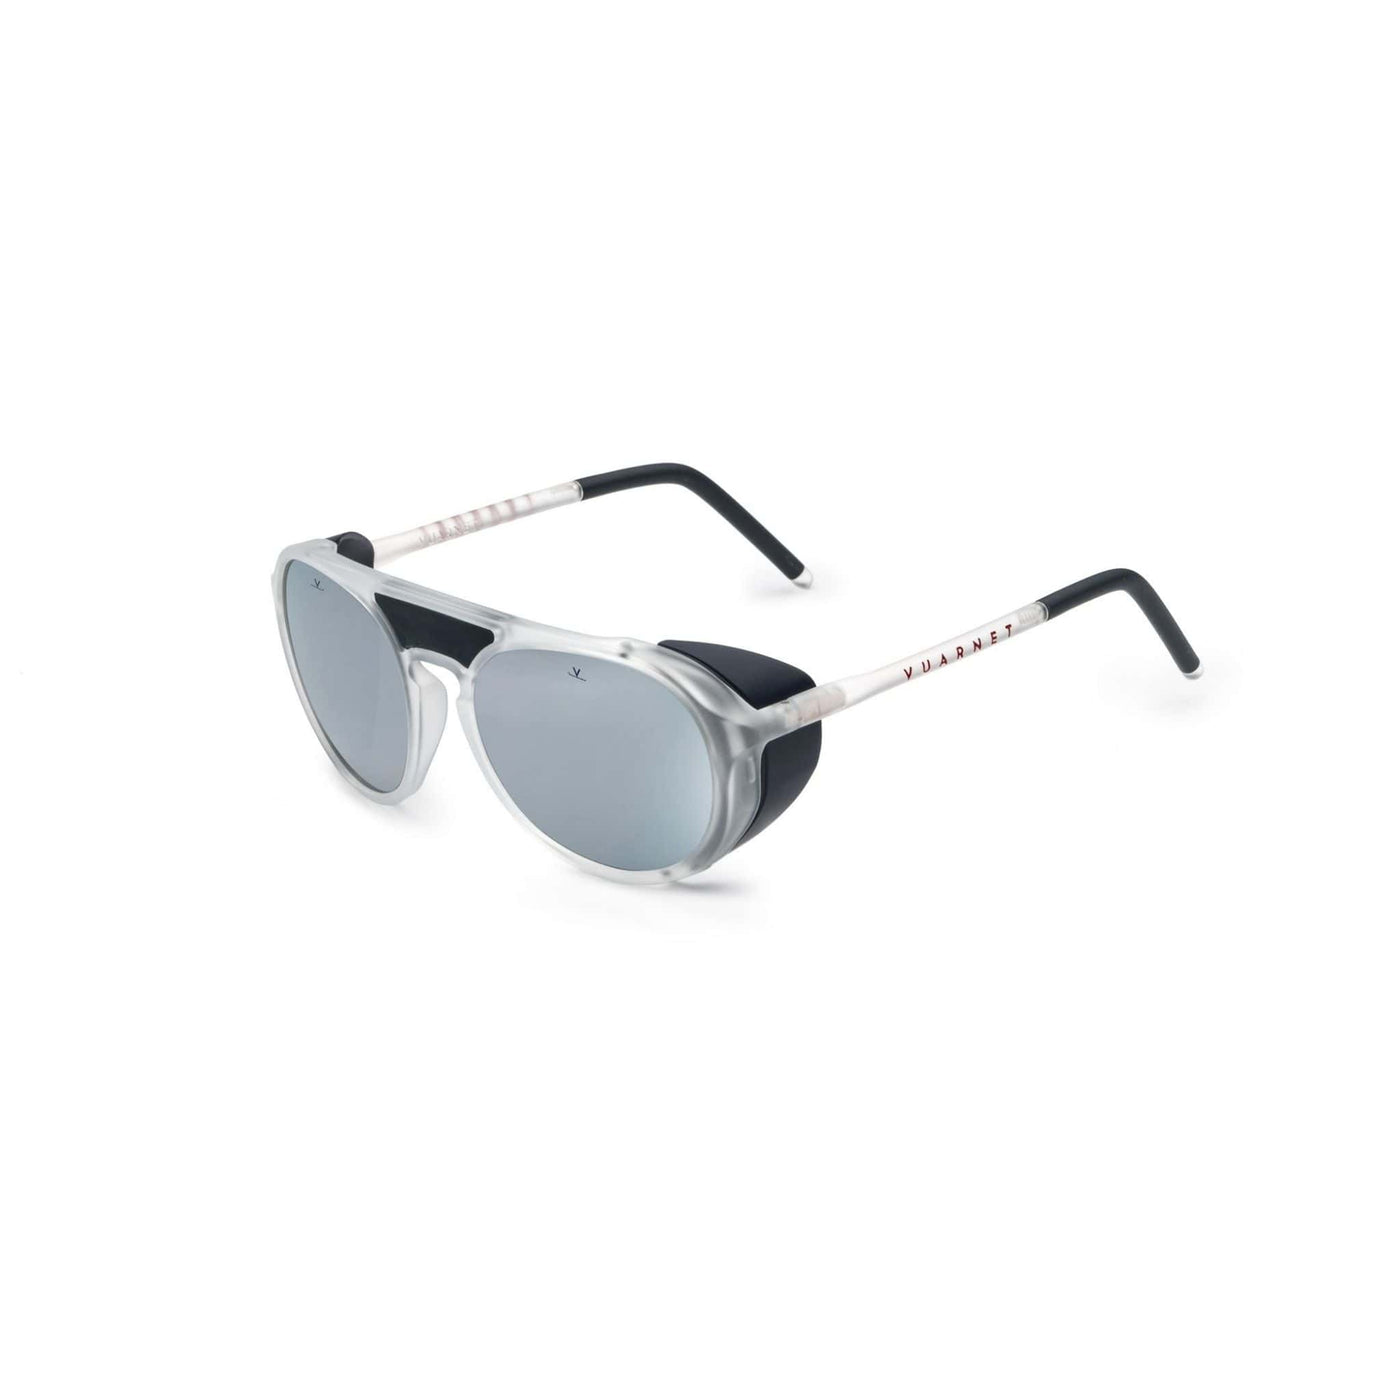 VUARNET 'ICE FACTORY' SKI Sunglasses /Crystal Black, 57% OFF